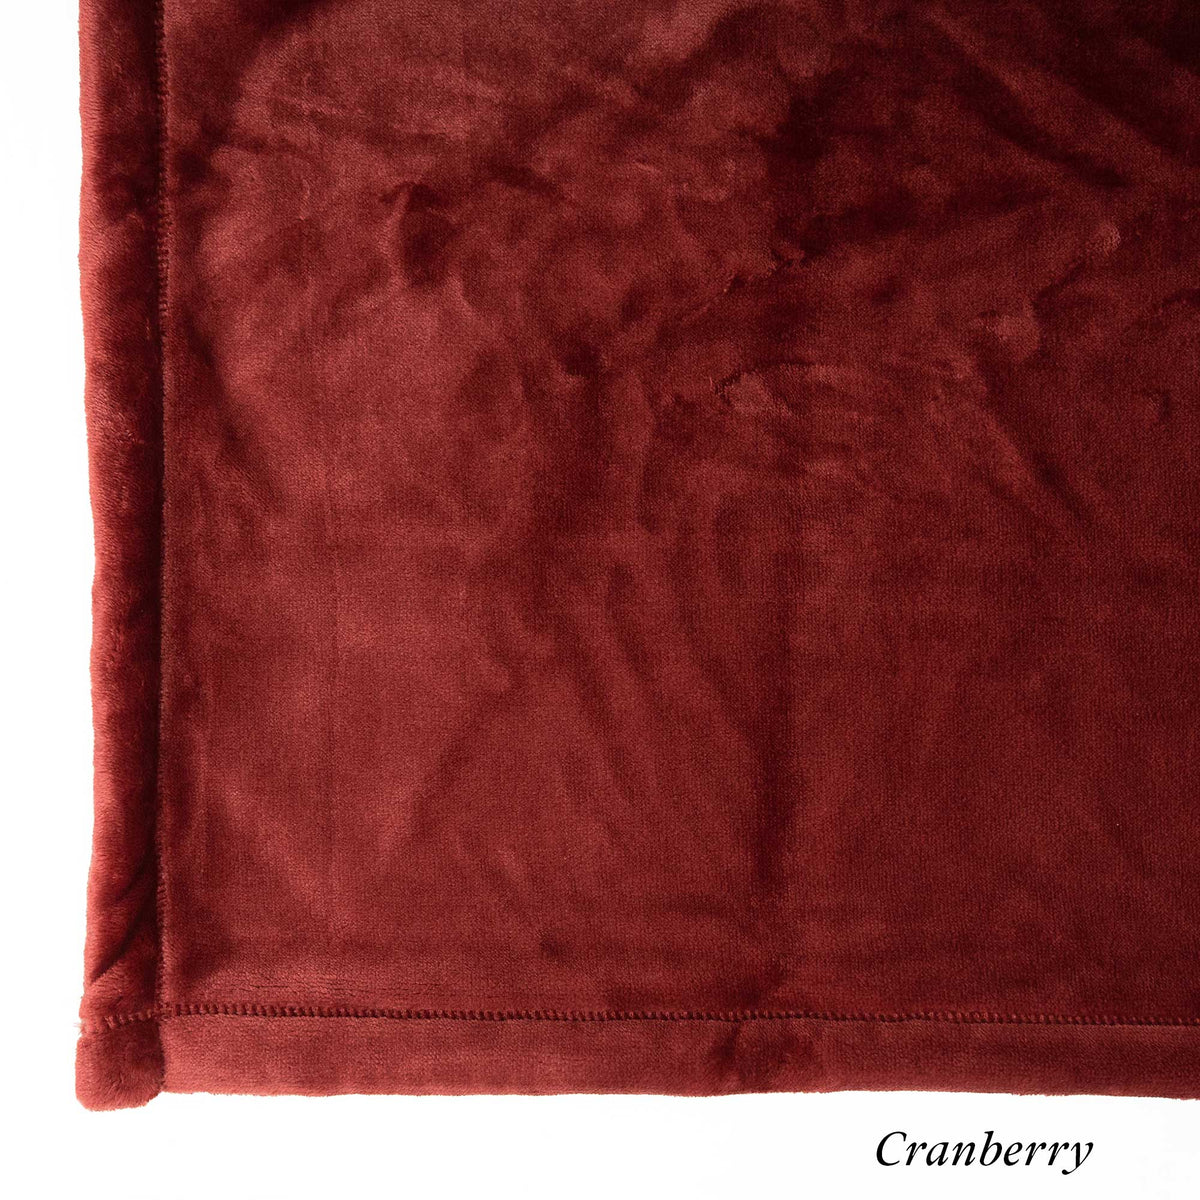 Cranberry Luster Loft Fleece Swatch - luster loft fleece heart pillow - Luster Loft Fleece - American Blanket Company